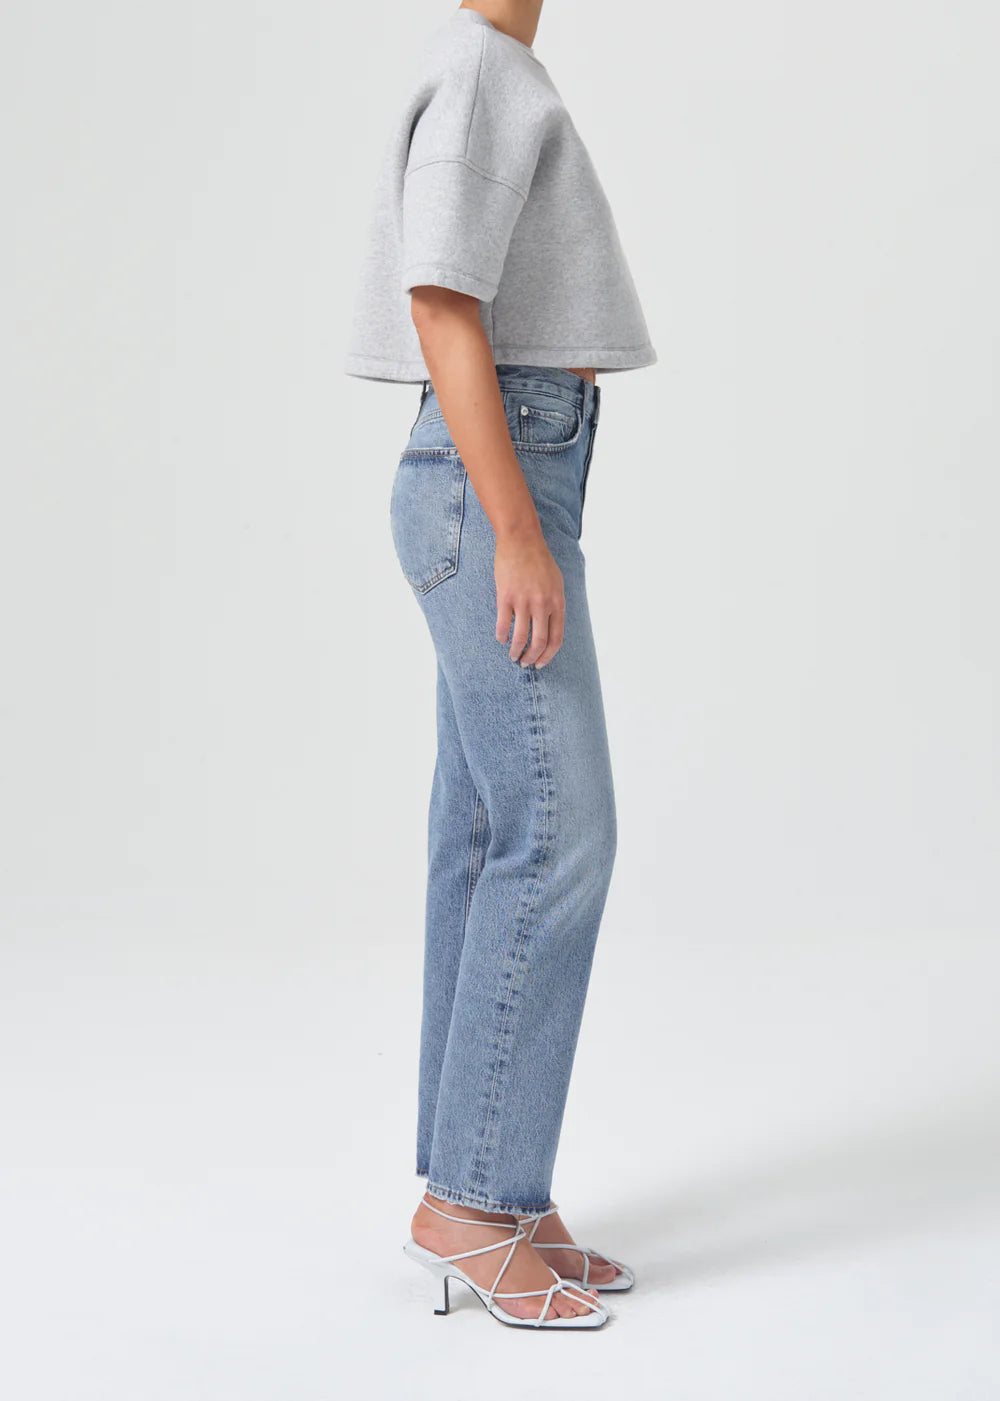 The model is wearing 90's Pinch Waist - Navigate jeans by AGOLDE.